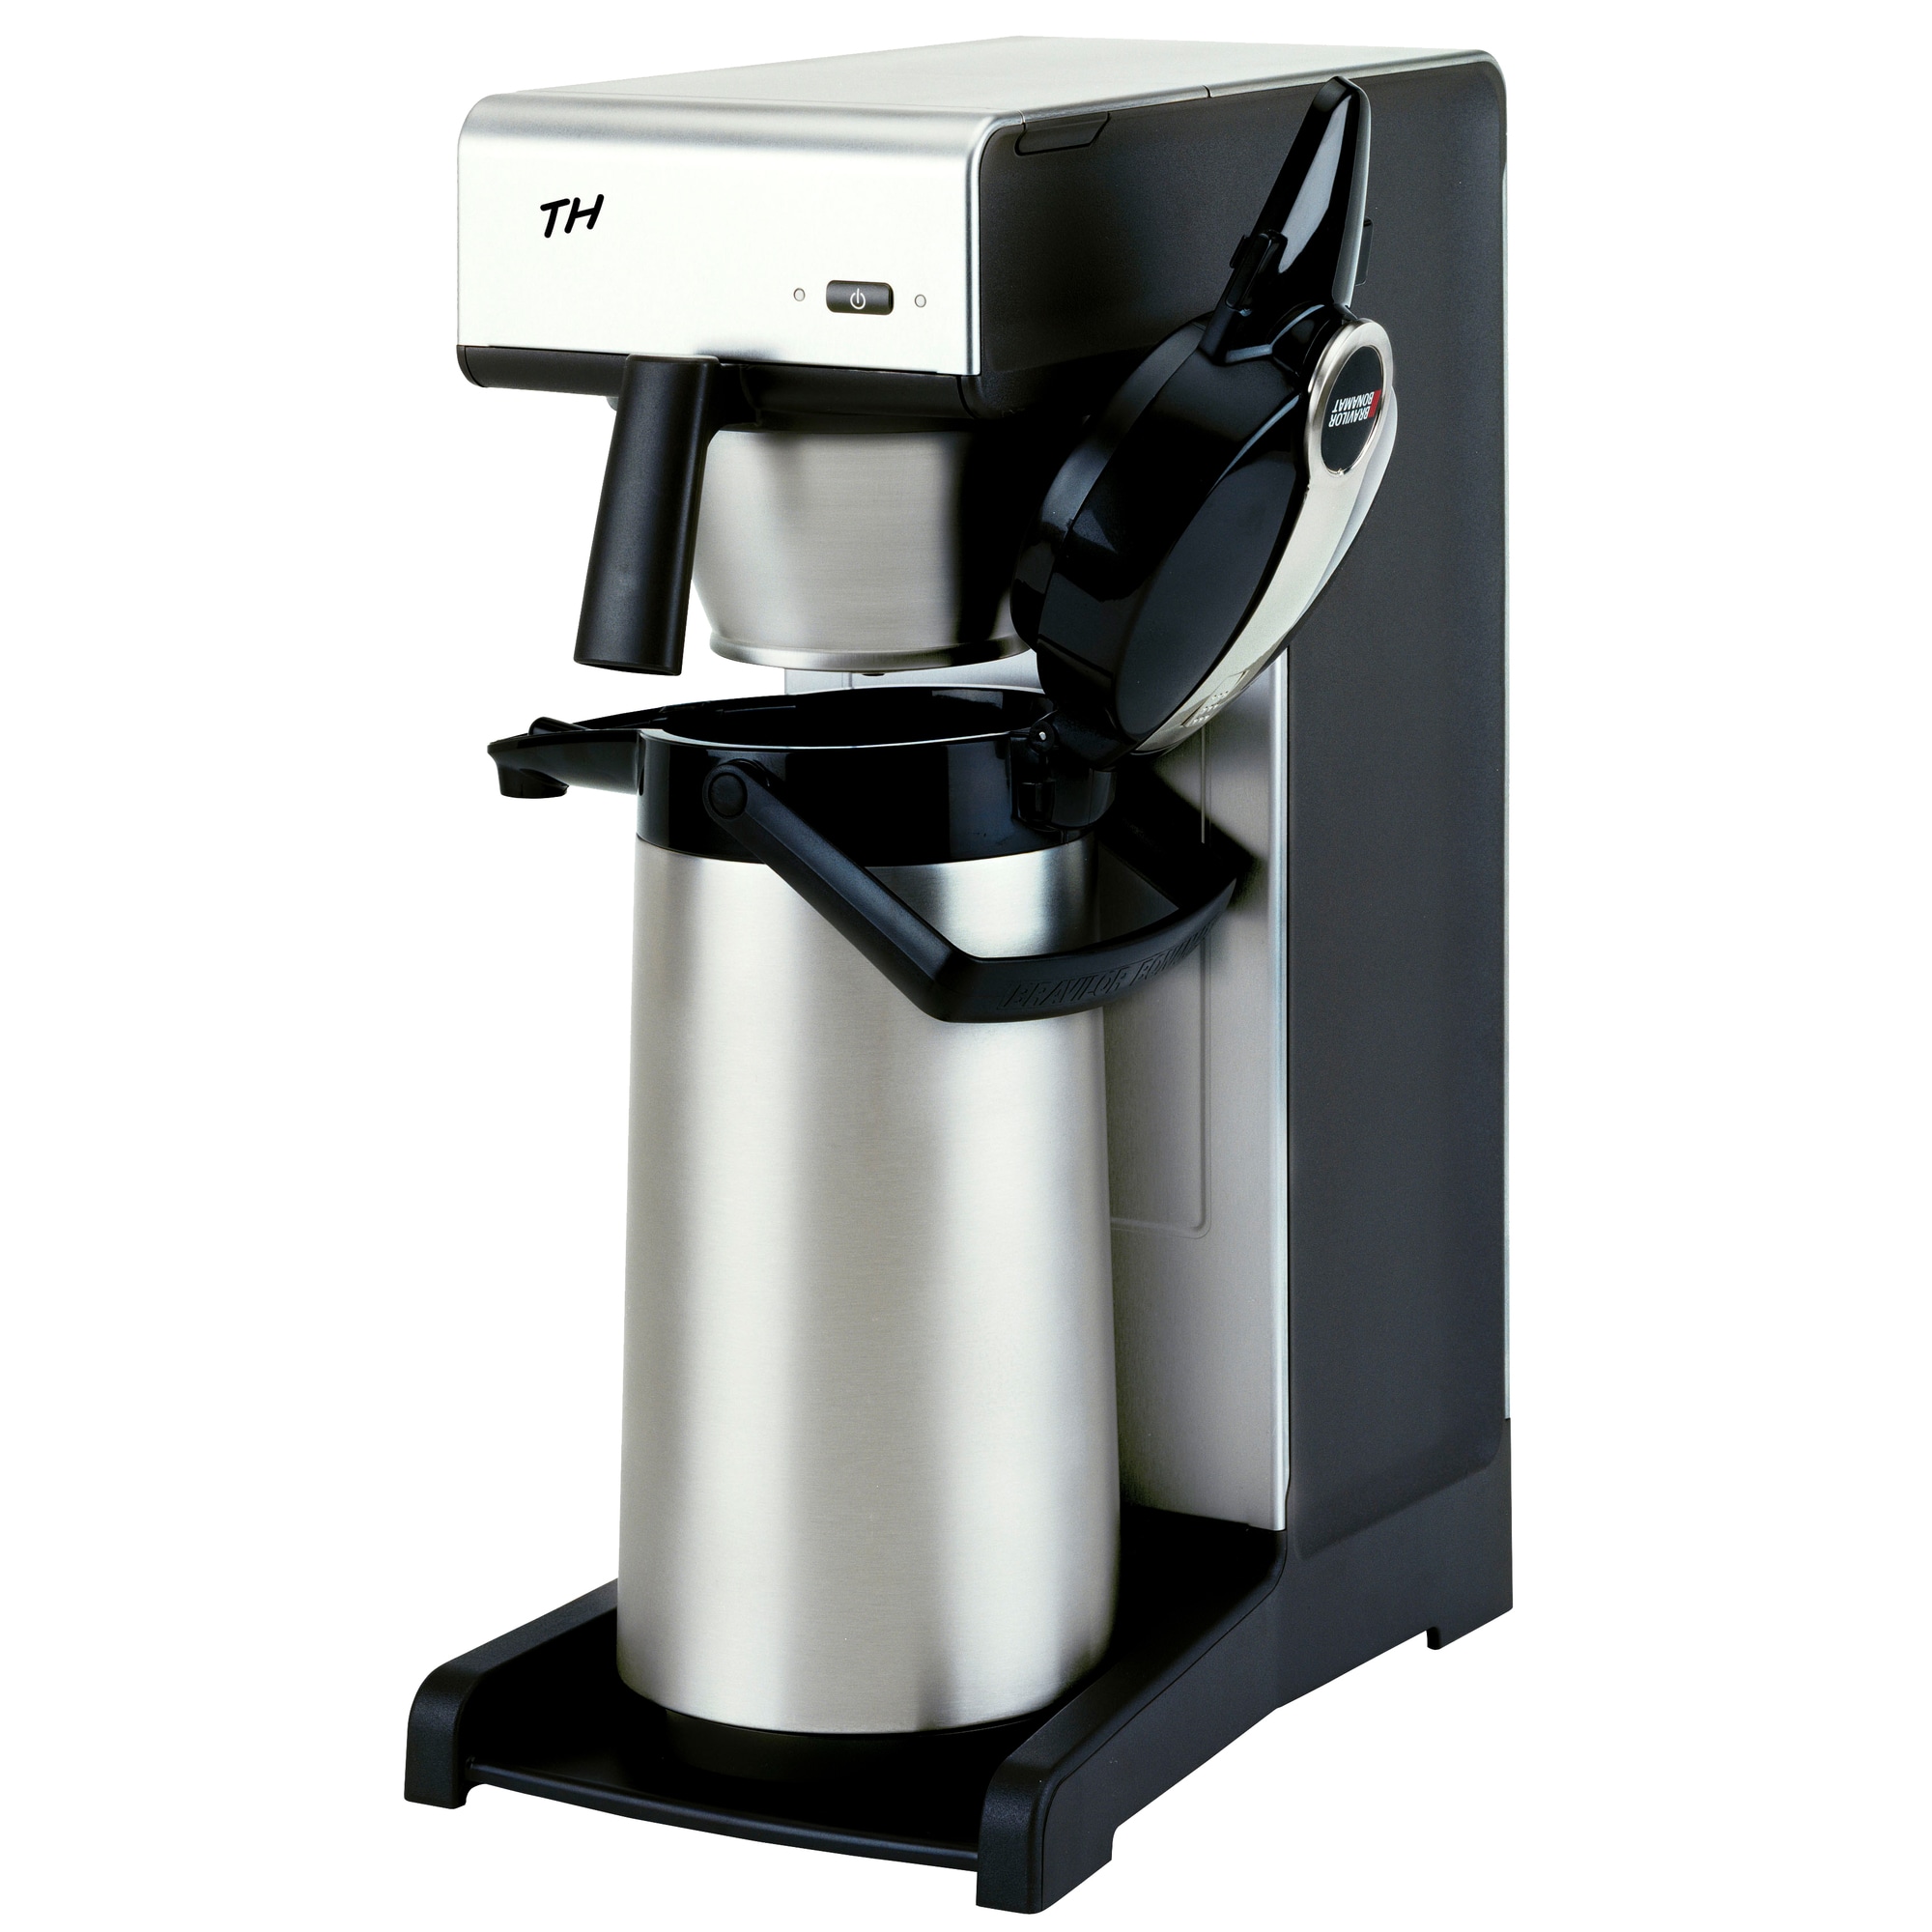 Køb Bravilor Bonamat TH kaffemaskine